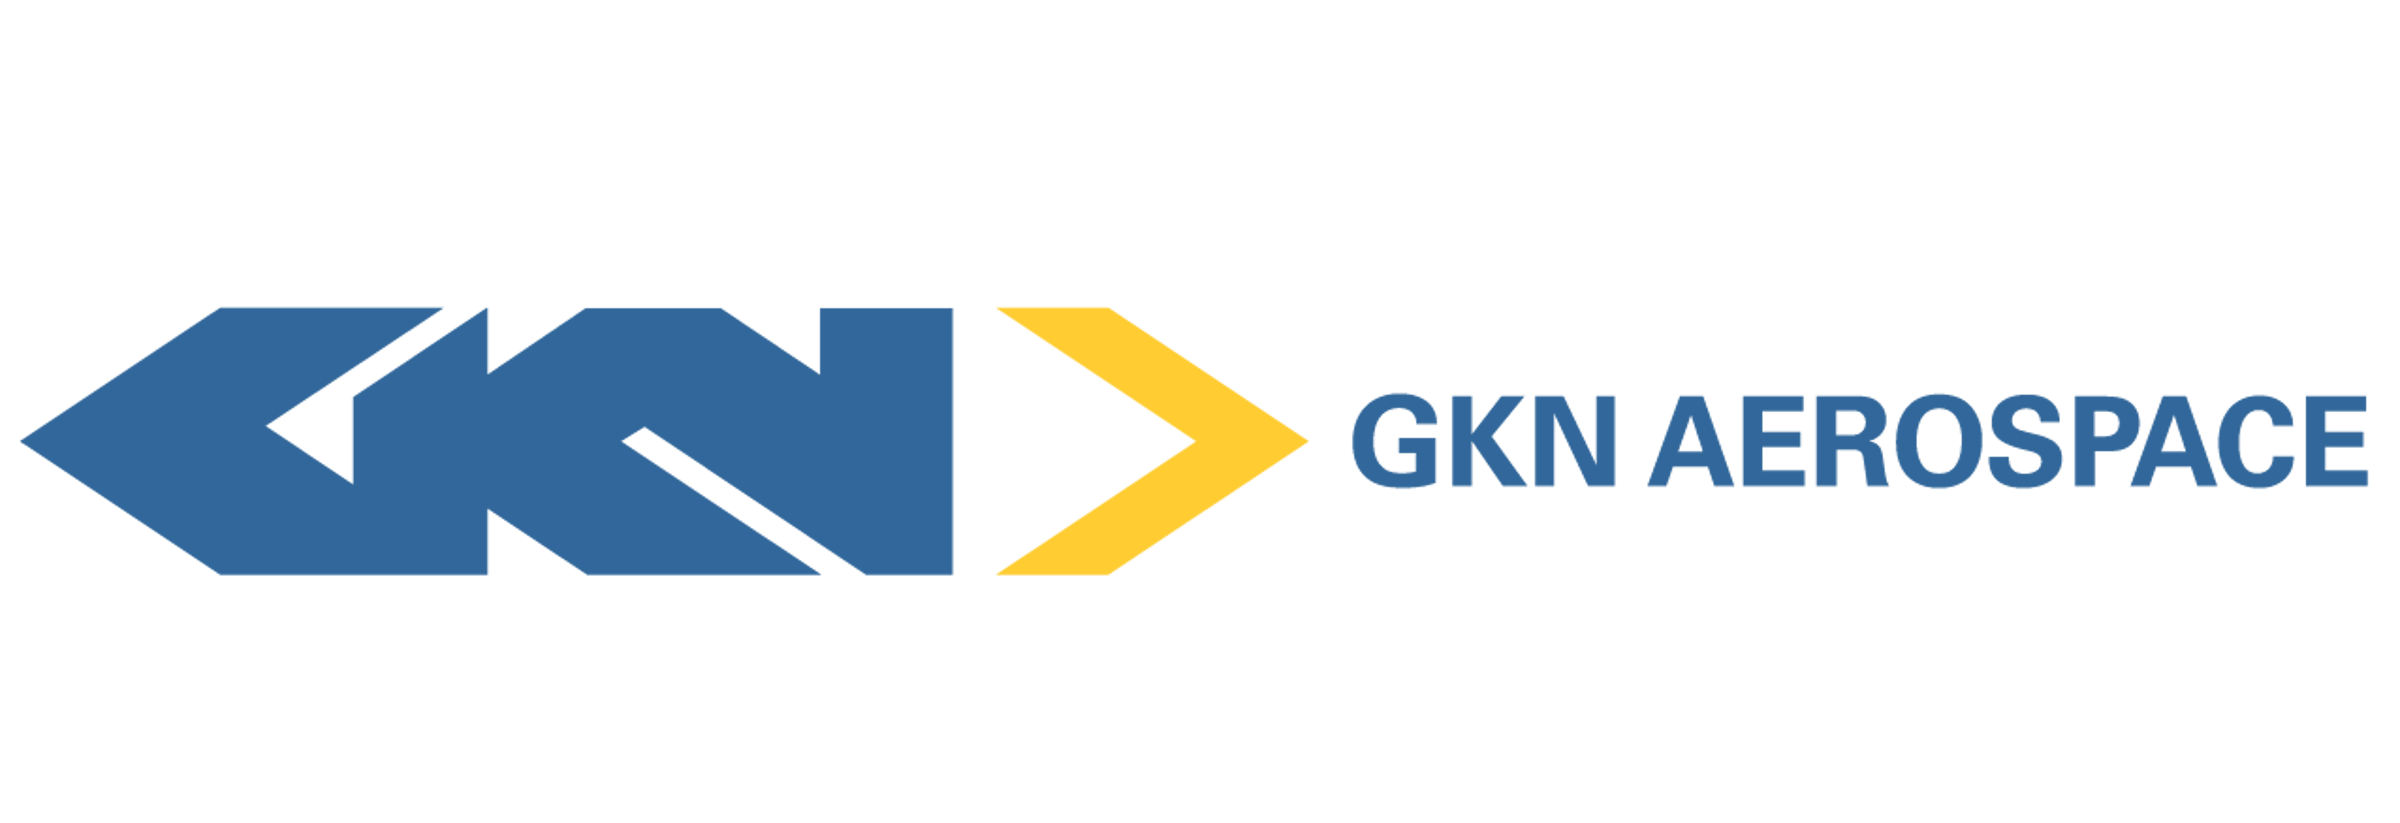 GKN Aerospace logo